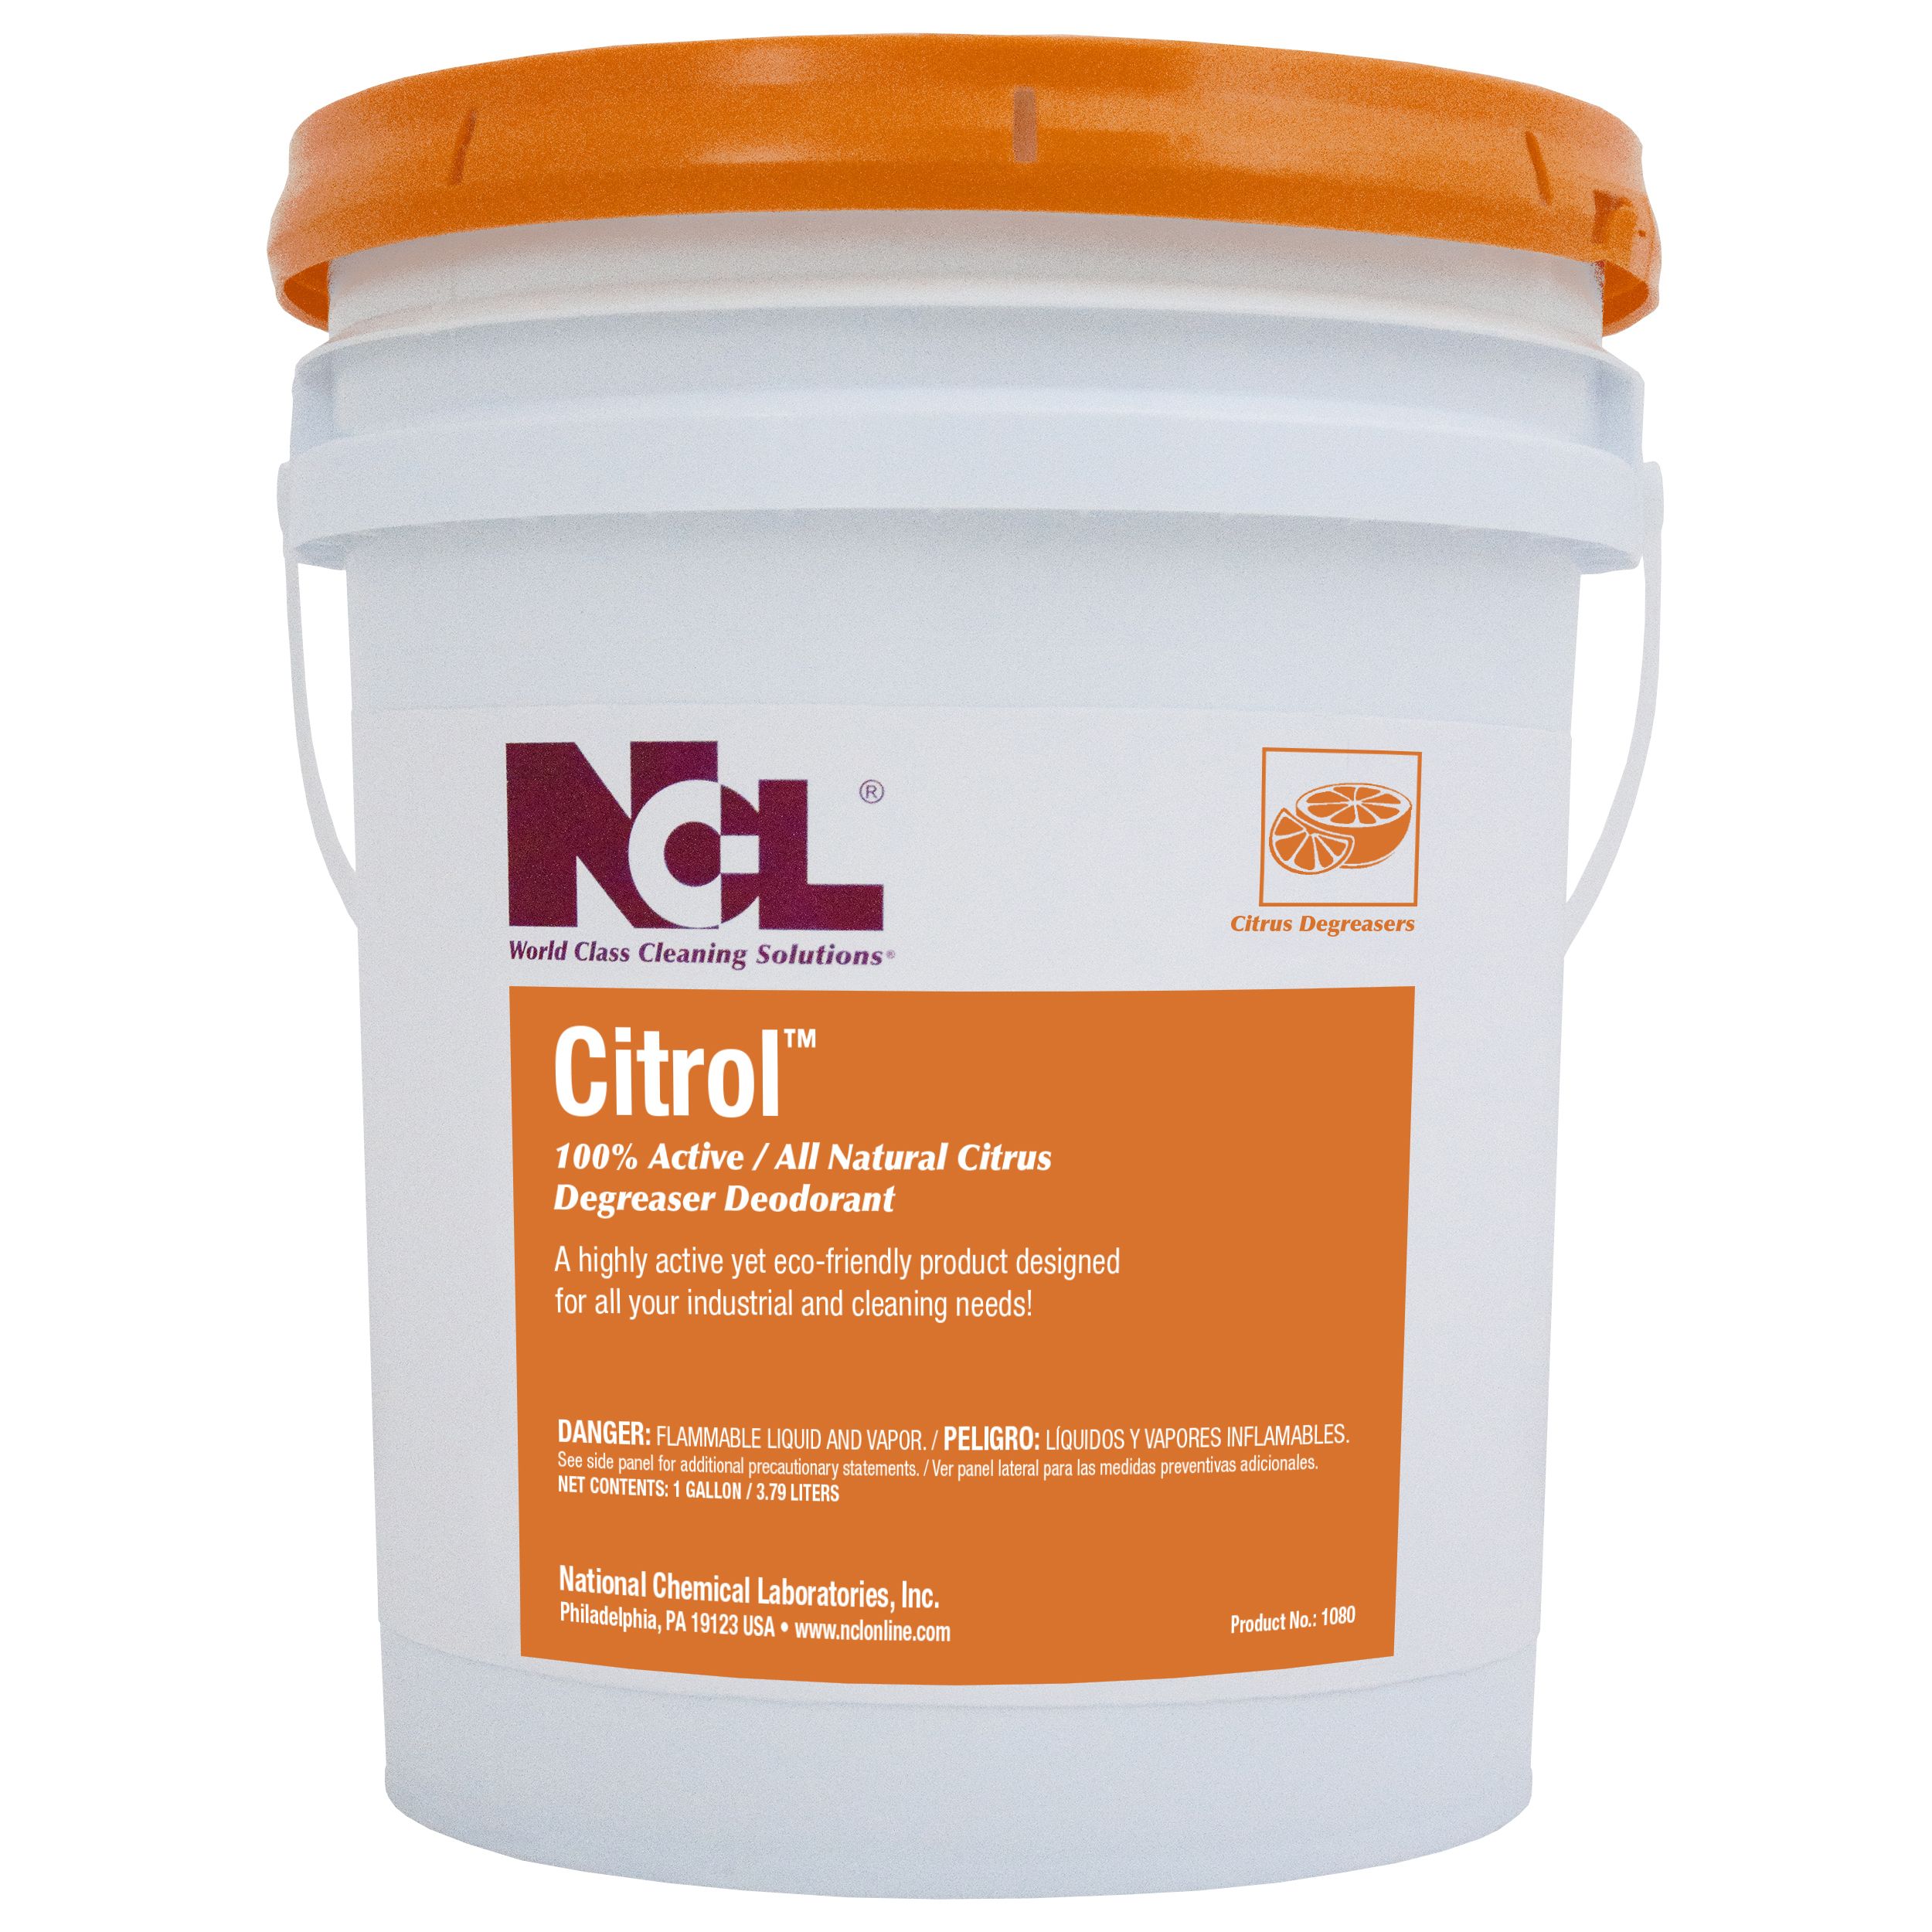  CITROL 100% Active / All Natural Citrus Degreaser Deodorant 5 Gal. Pail (NCL1080-11) 